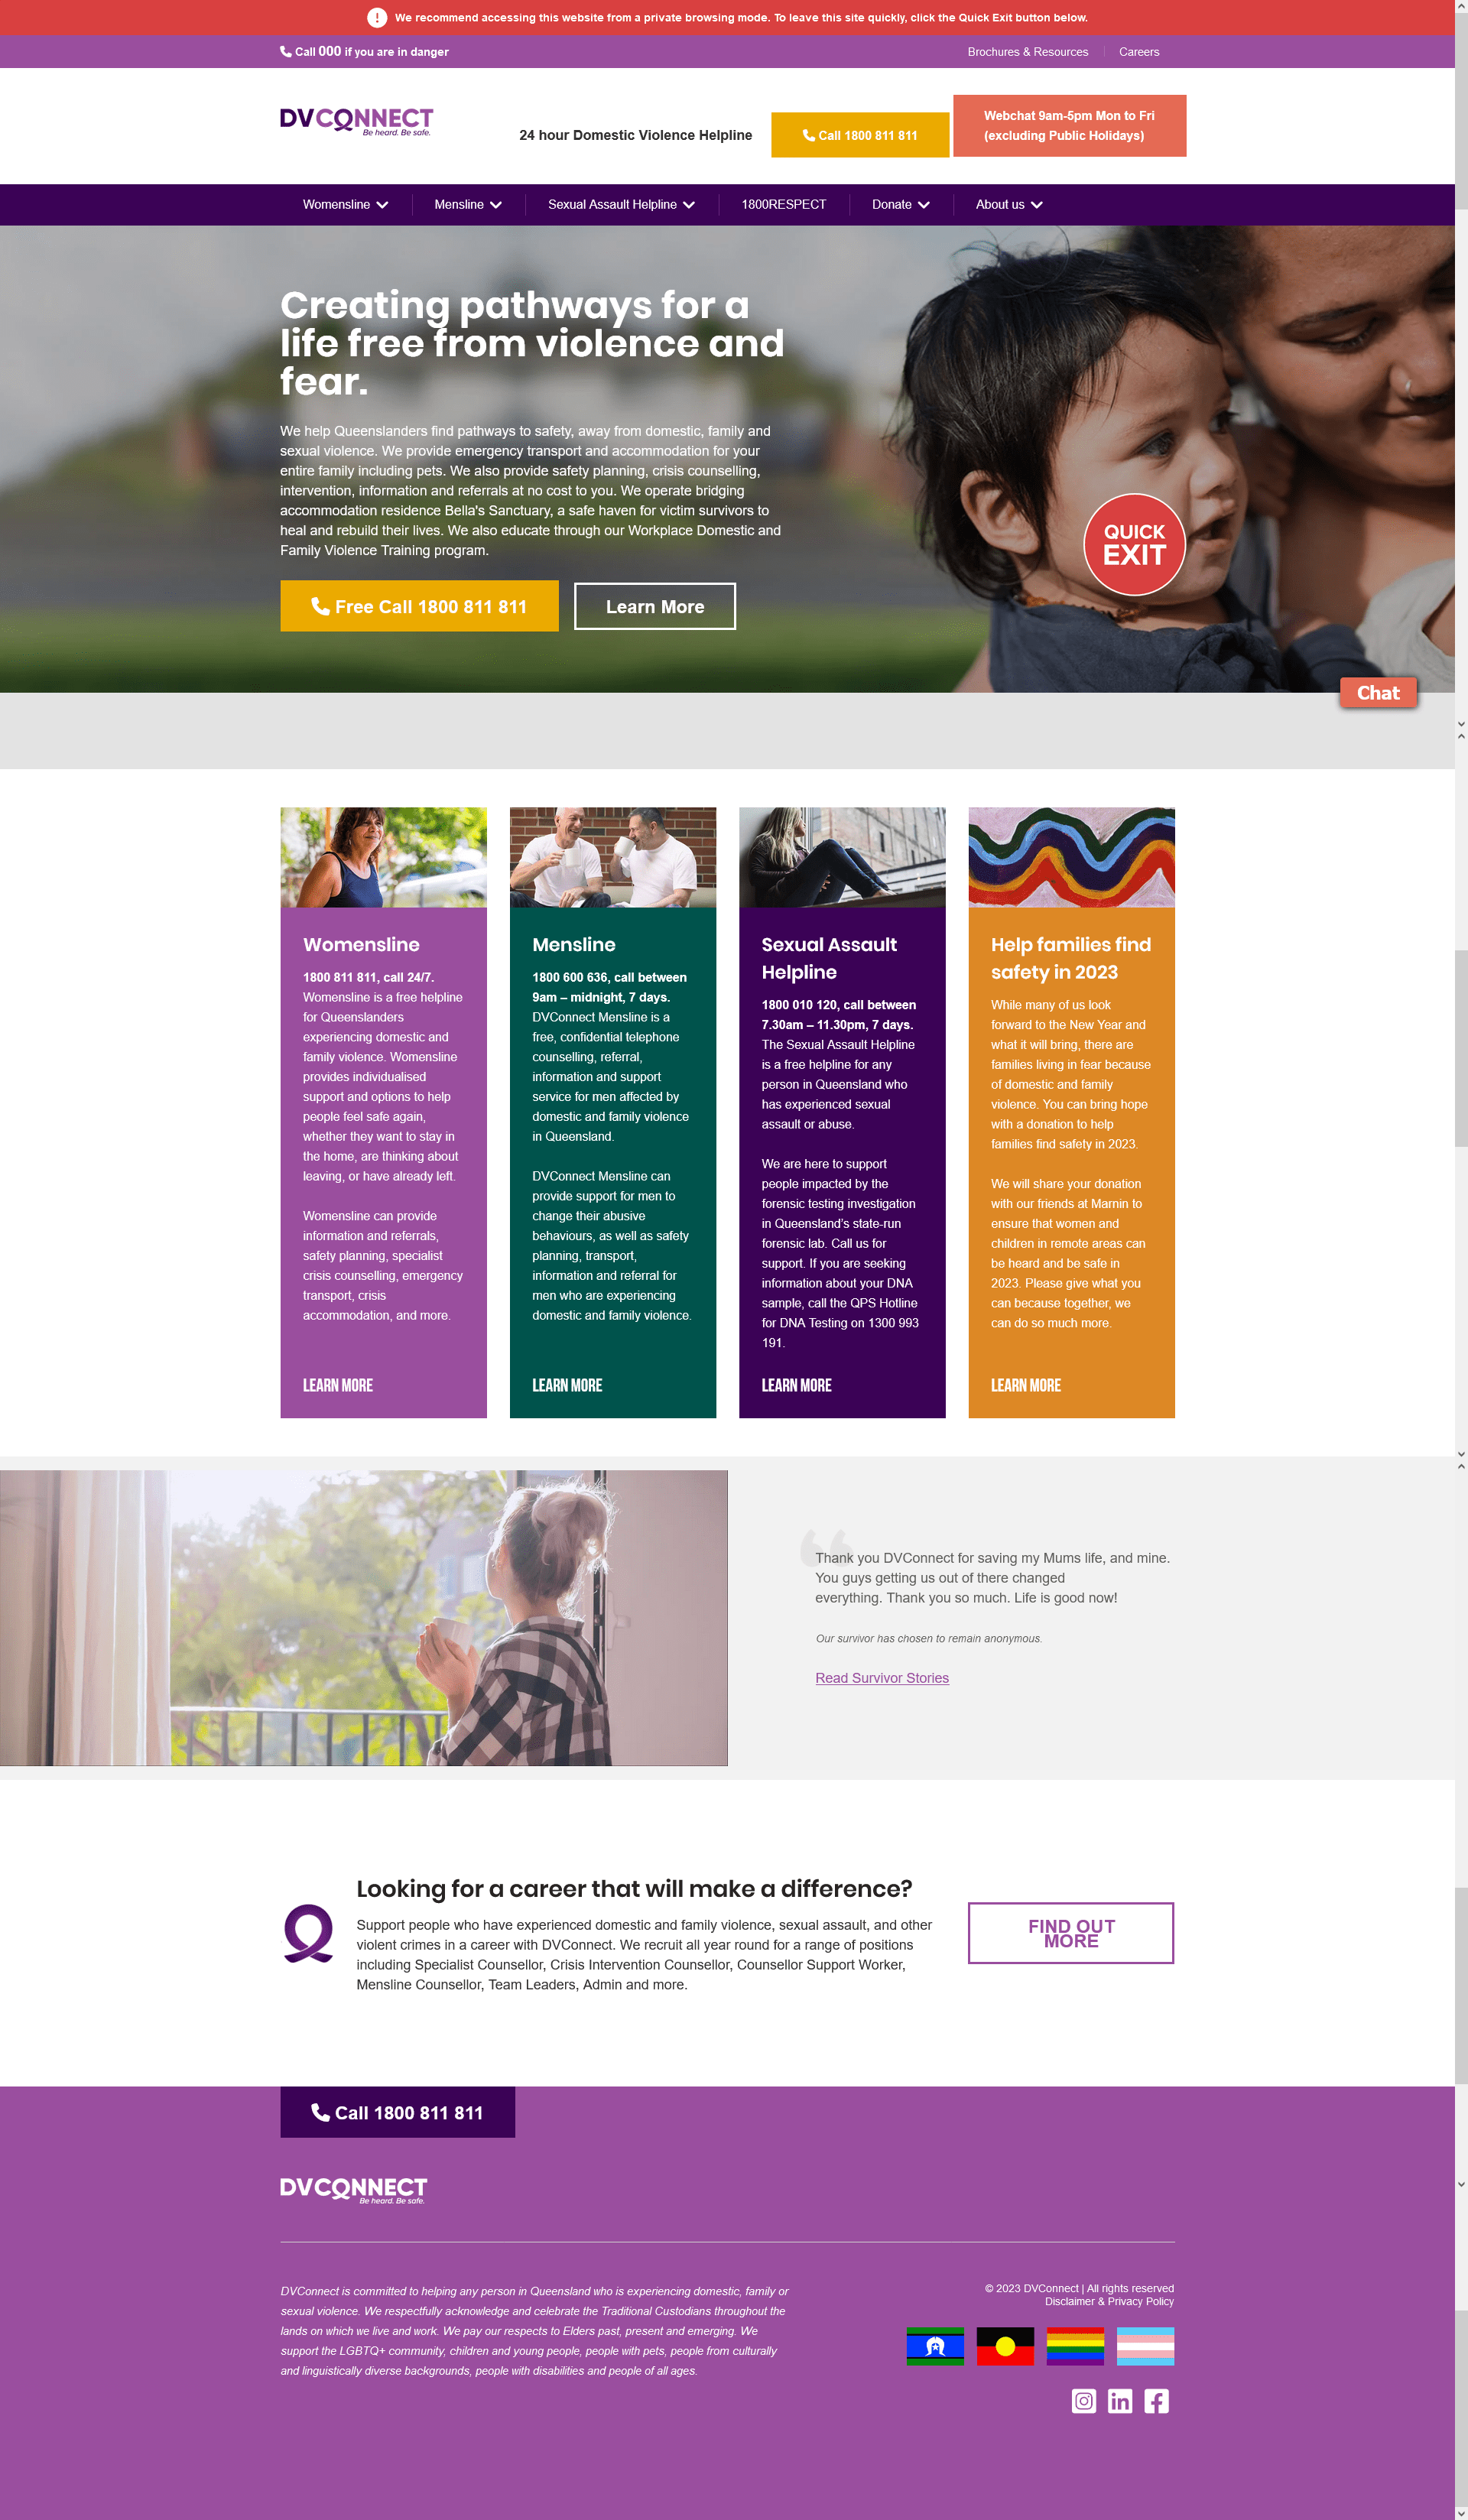 DV Connect homepage design